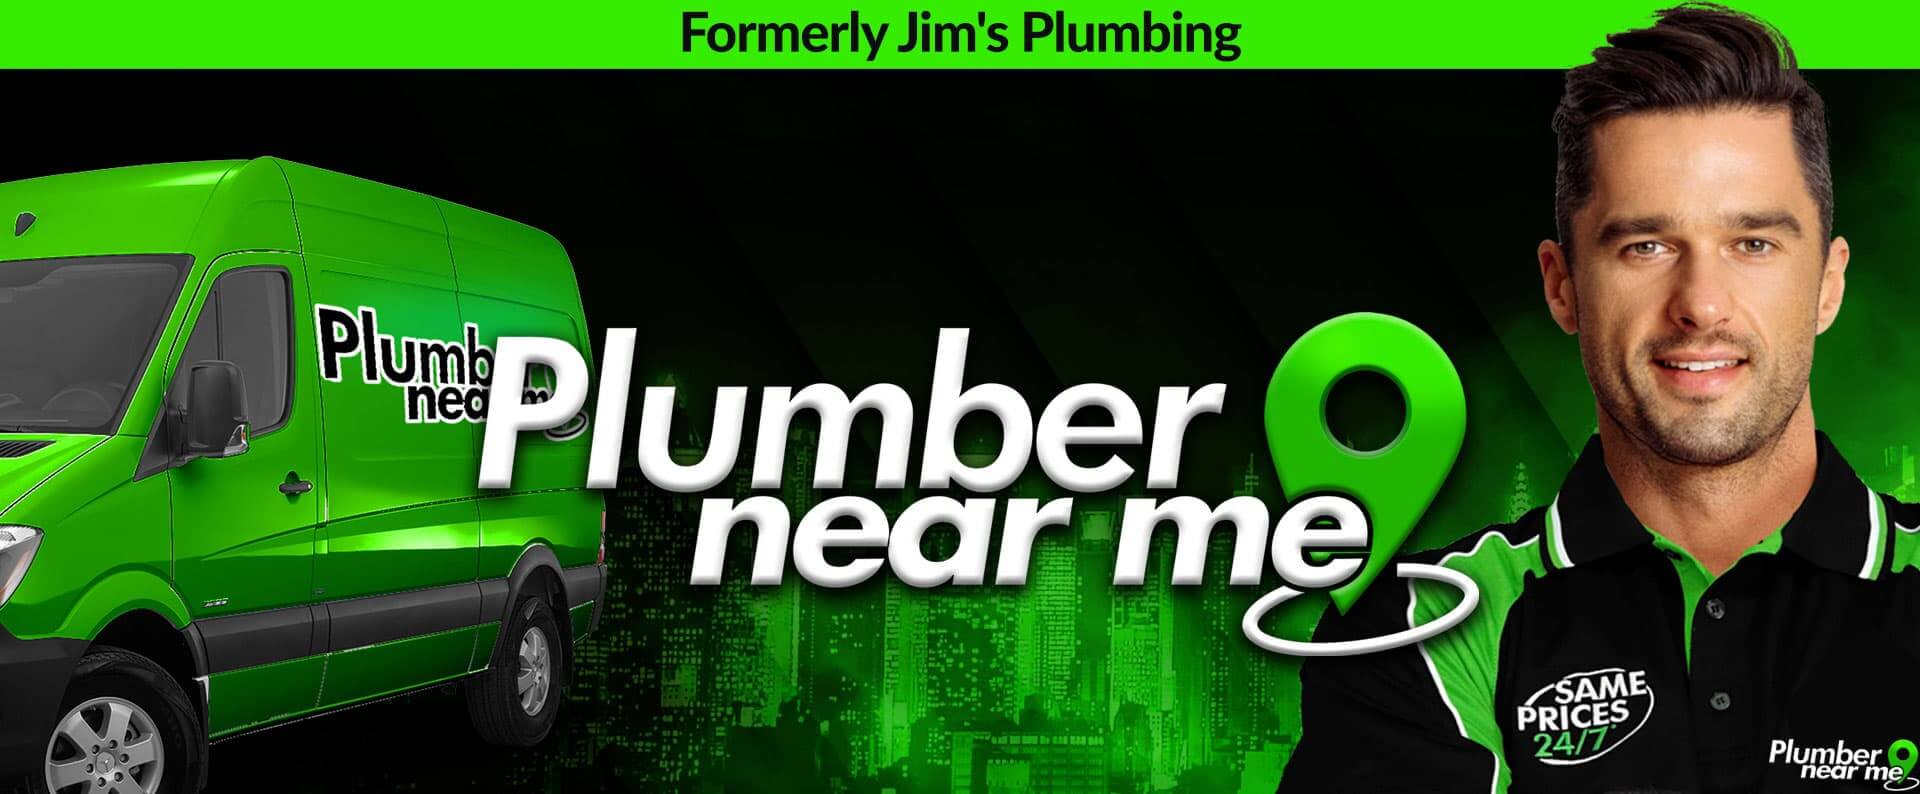 Jim's Plumbing is now Plumber Near Me